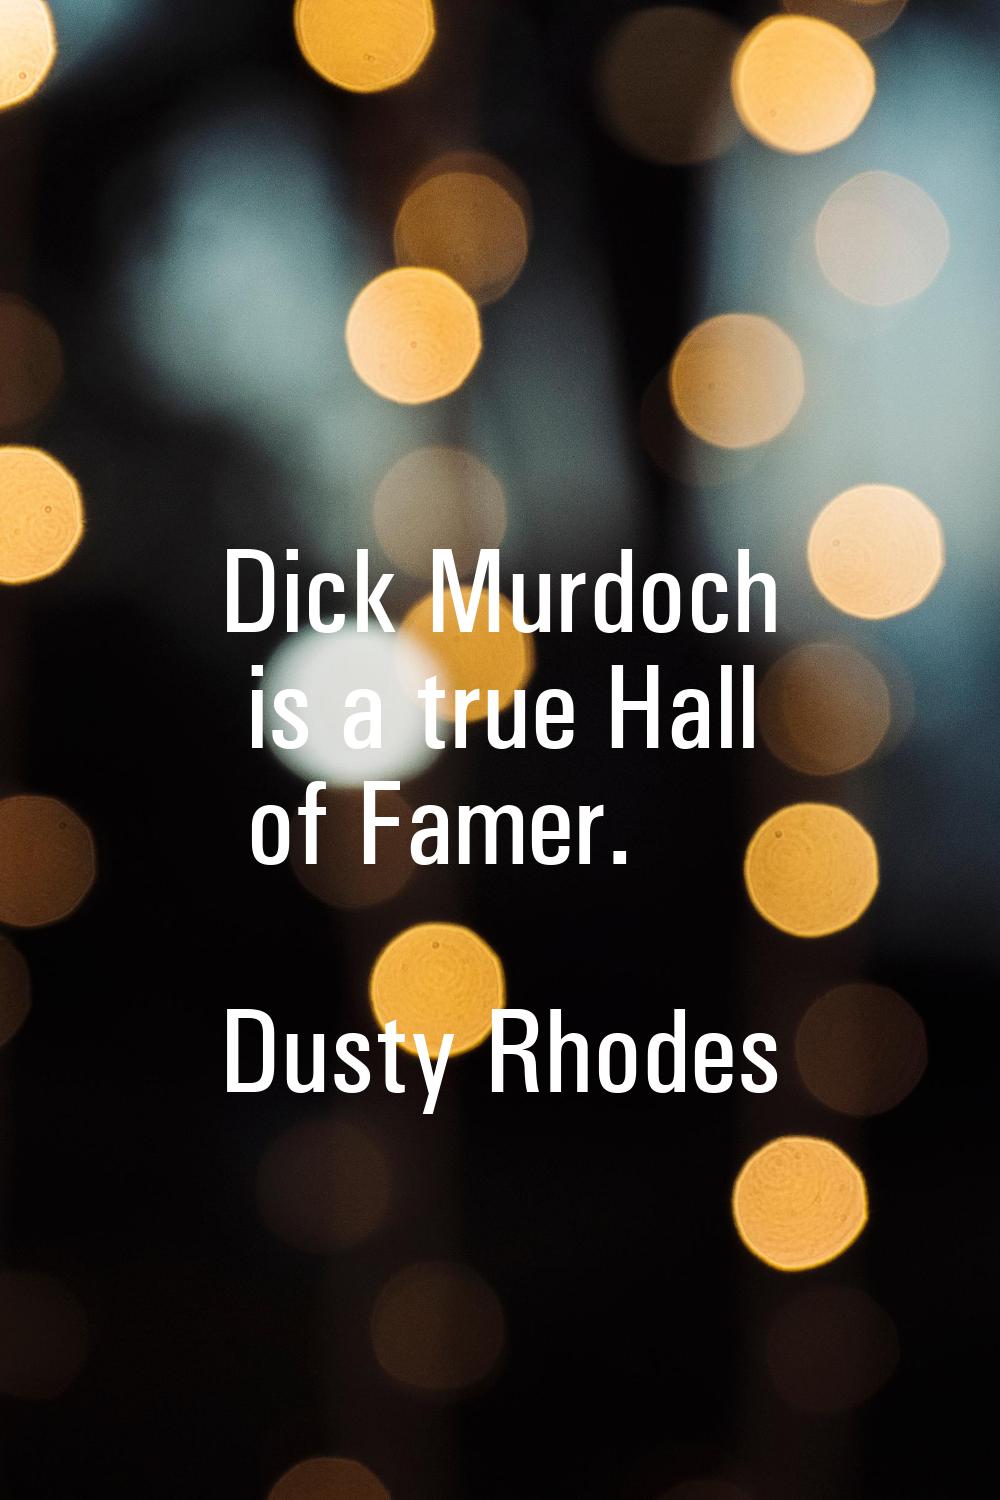 Dick Murdoch is a true Hall of Famer.